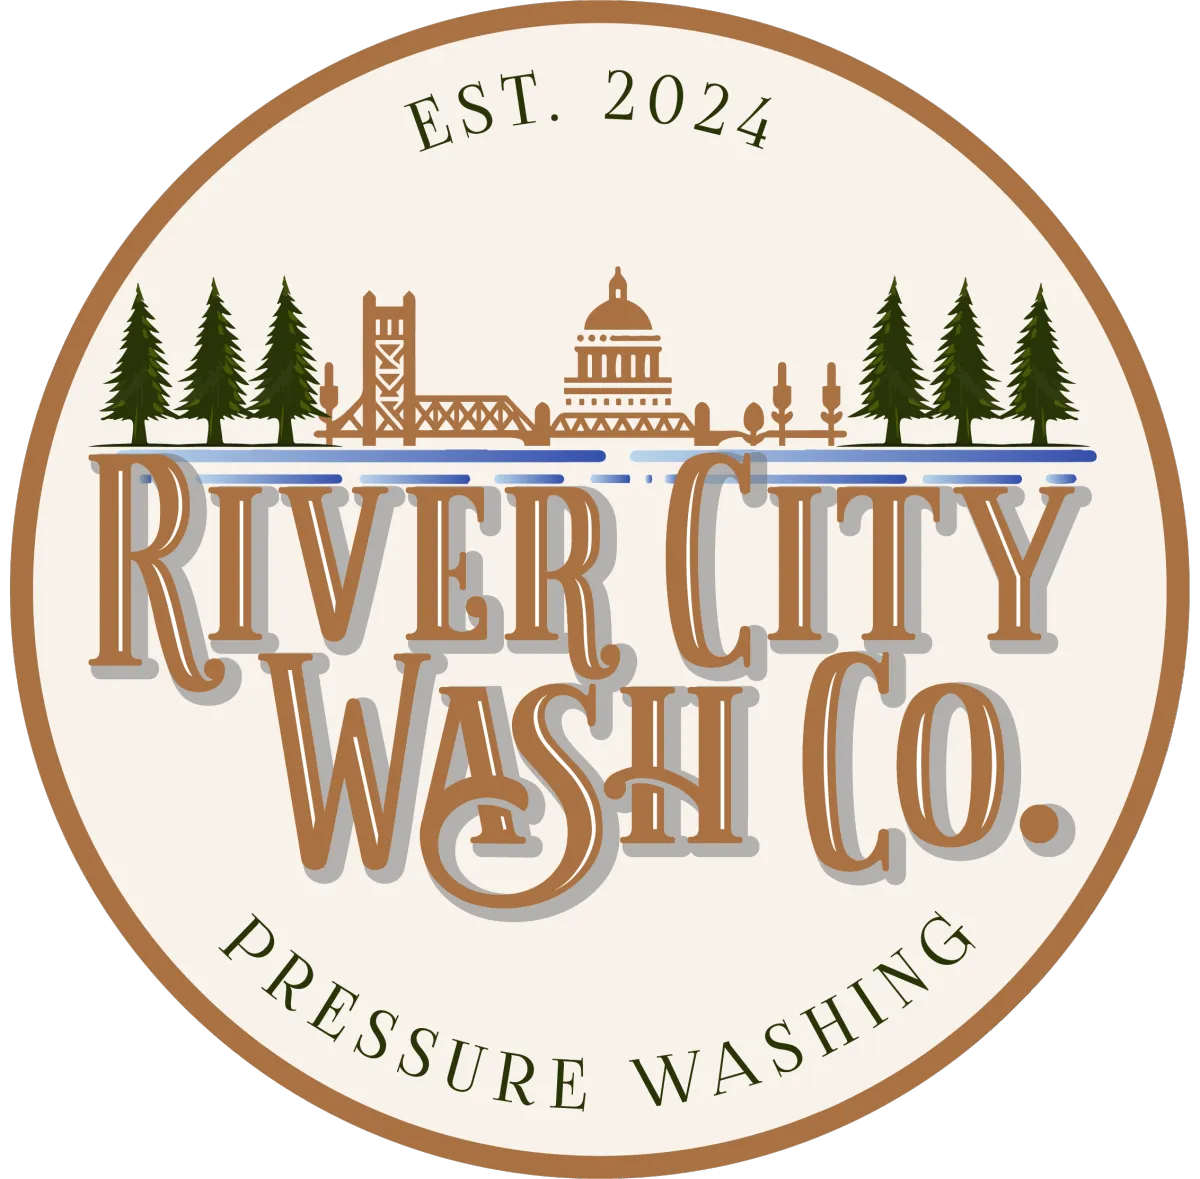 River City Wash Co brand logo